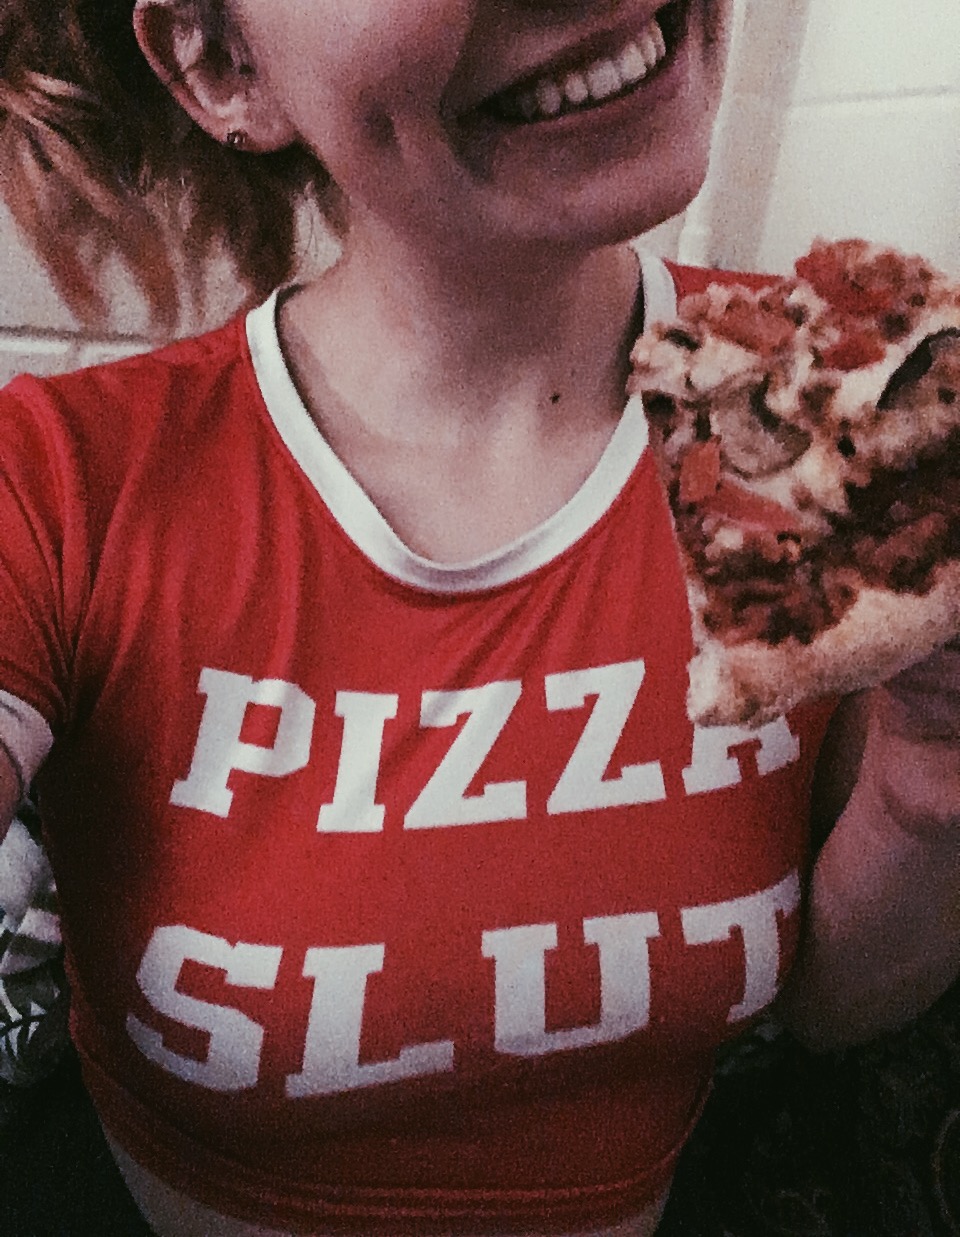 t shirt - Pizza > Slut